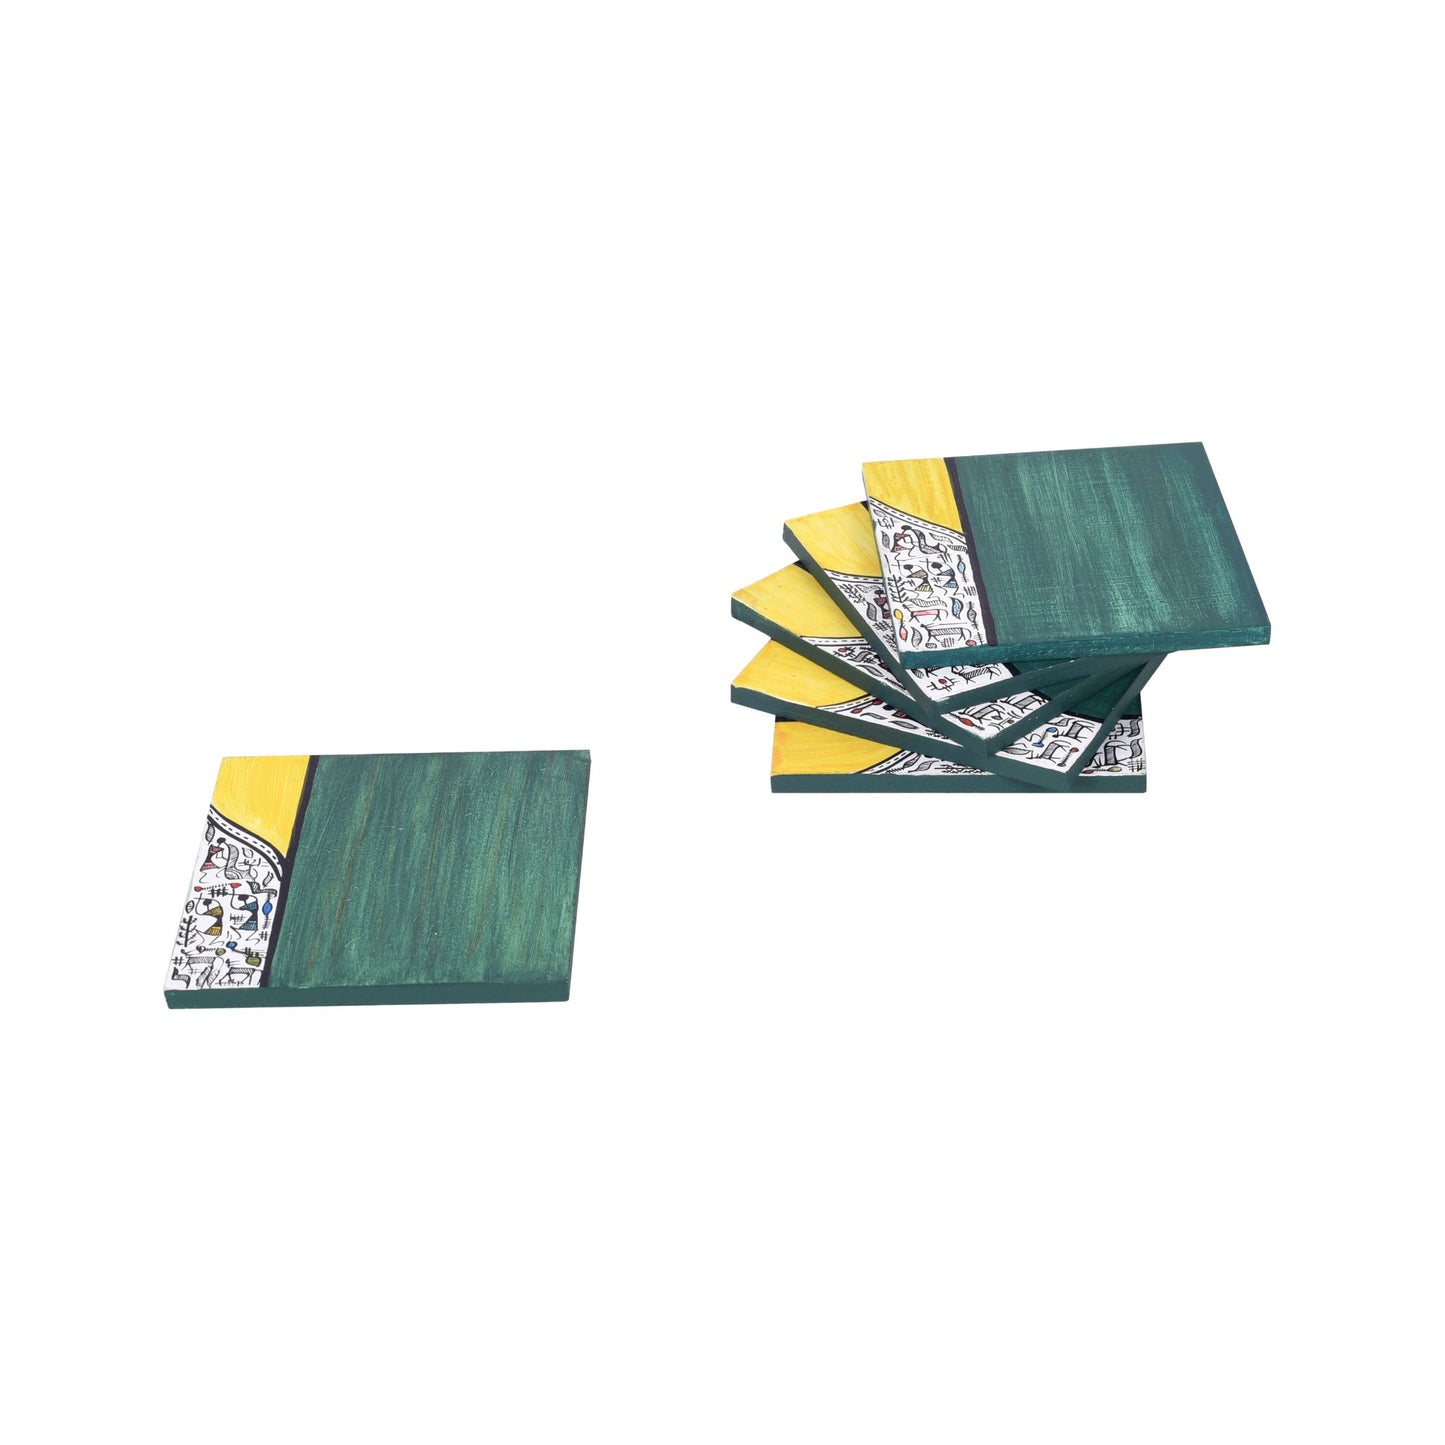 Warli Blues Handpainted Coasters (Set Of 6) (4x4x0.1)